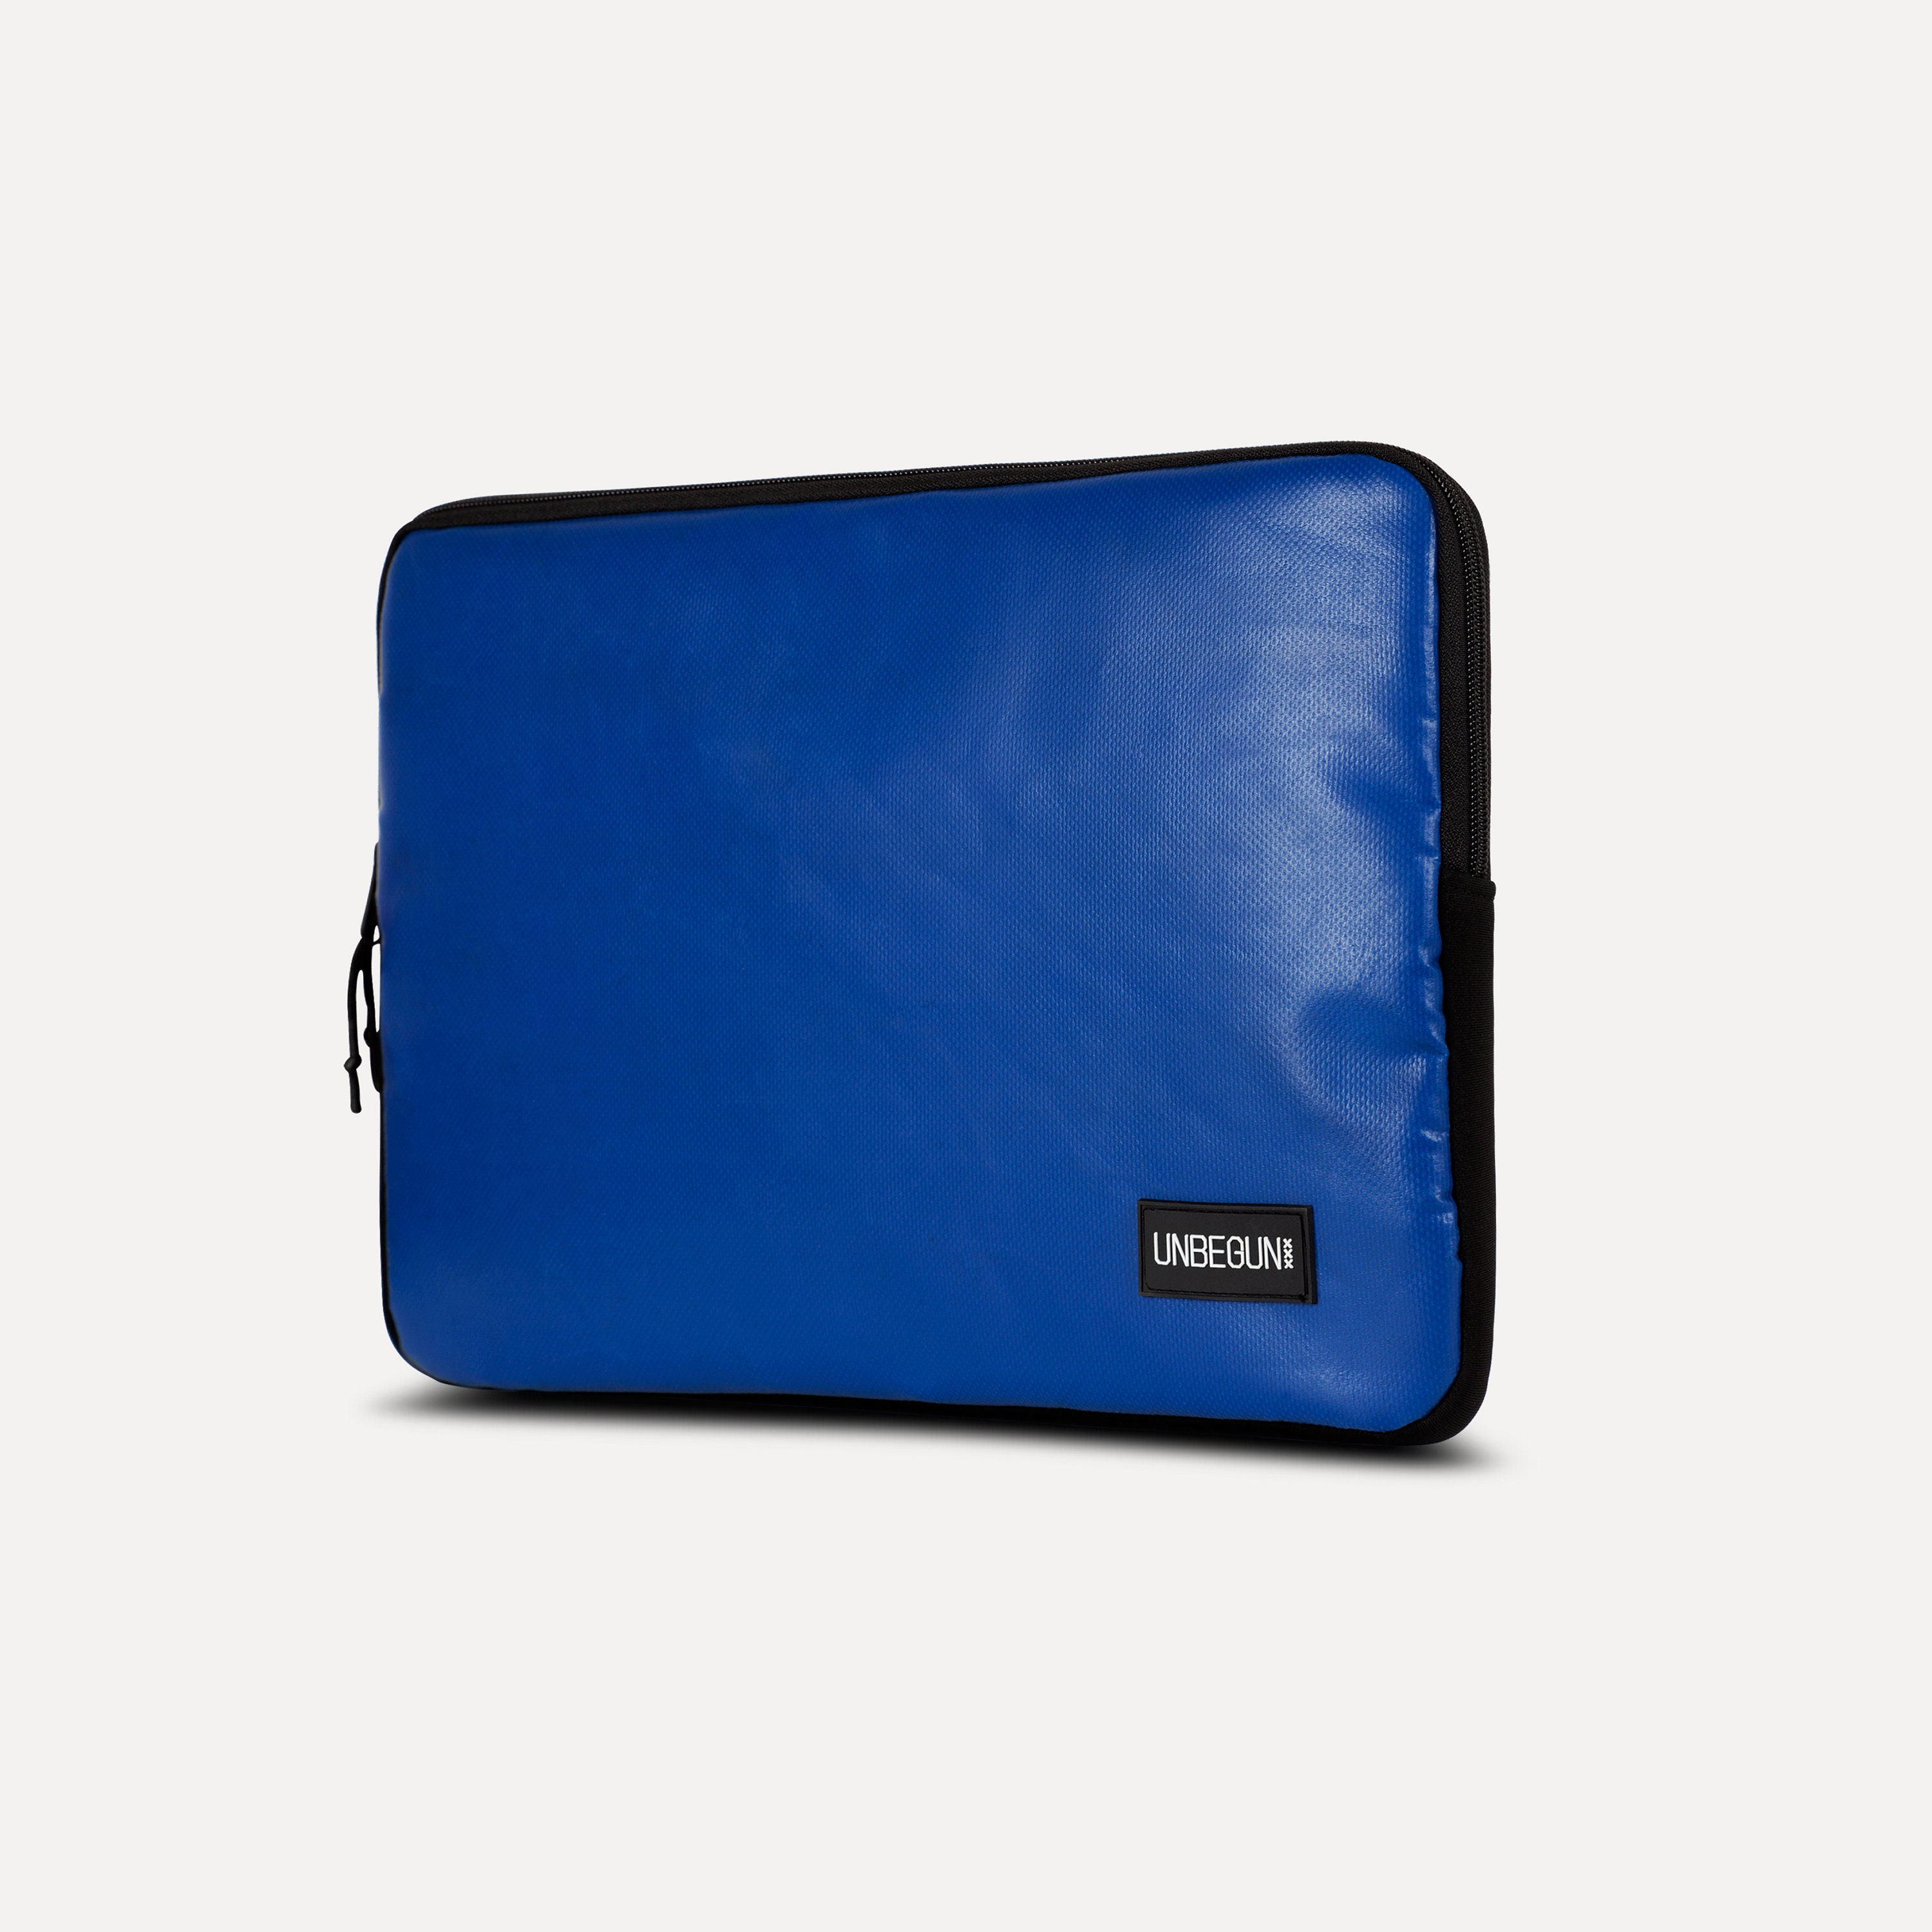  Inhomer Laptop Shoulder Bag Watercolor Ink Blue Black White  Football Messenger Carrying Handbag Case Sleeve Briefcase fits in 13.4-14.5  inch Notebook Computer Tablets : Electronics